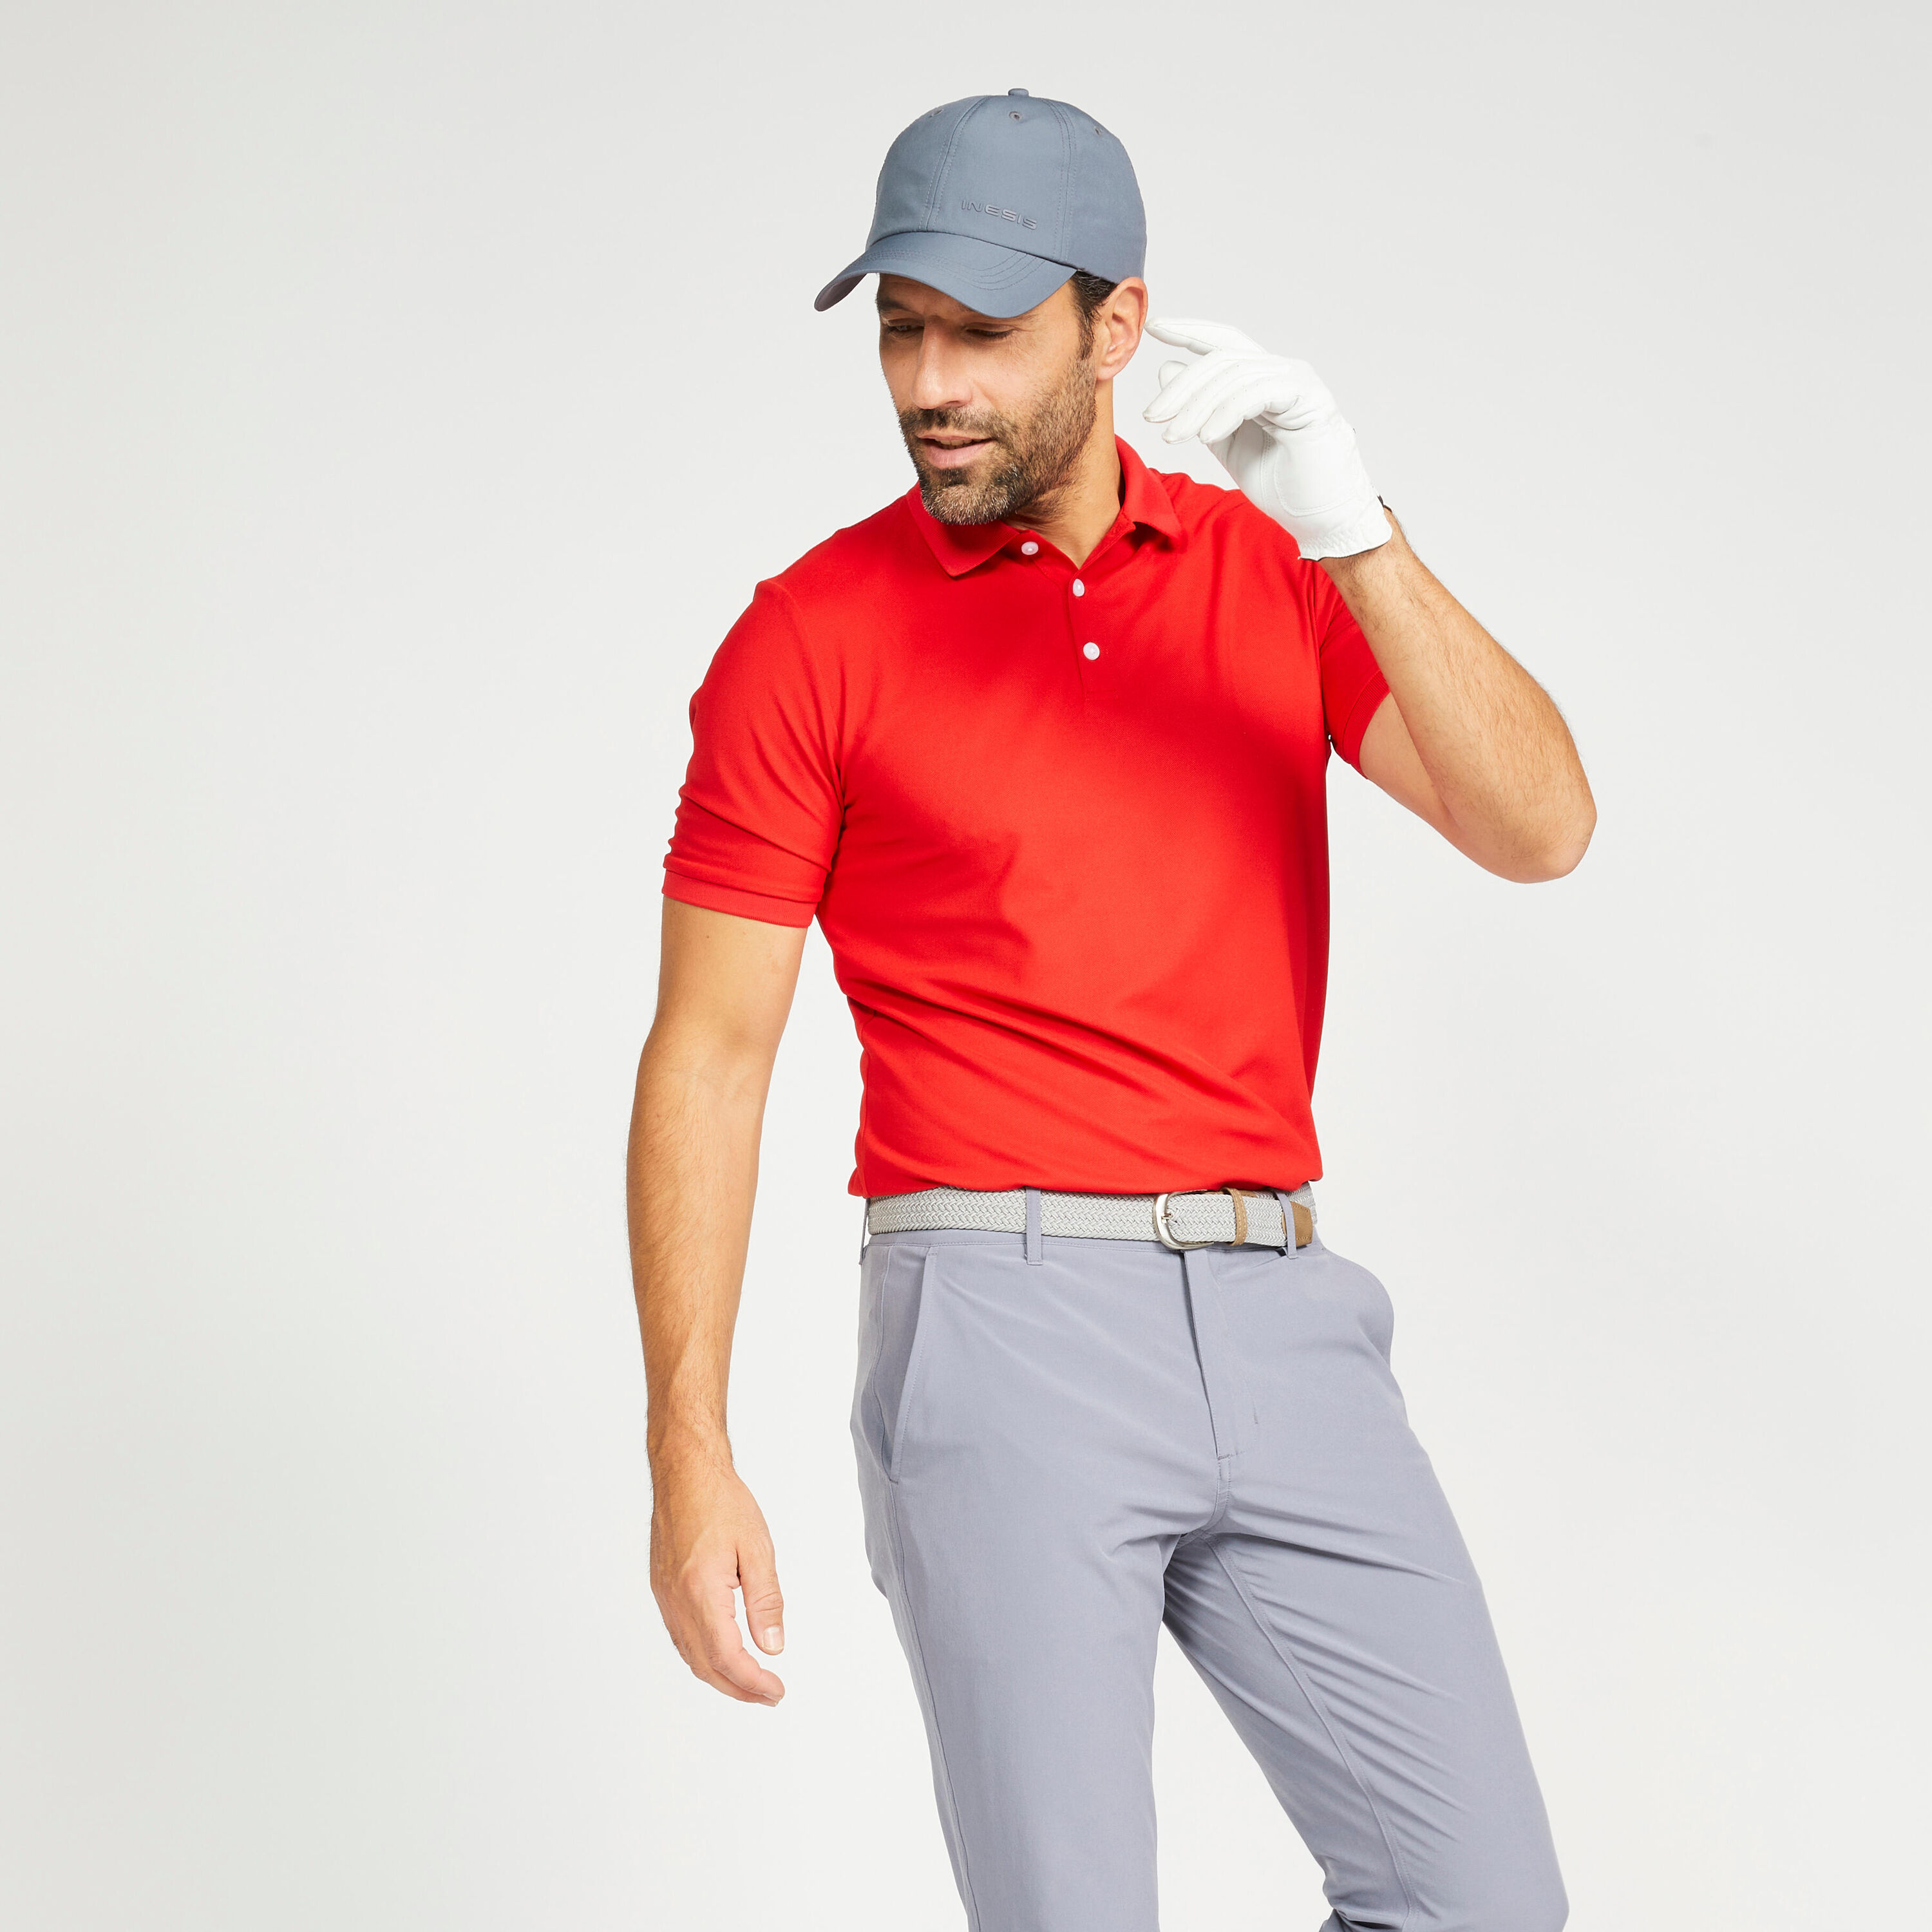 INESIS Men's short-sleeved golf polo shirt - WW500 red